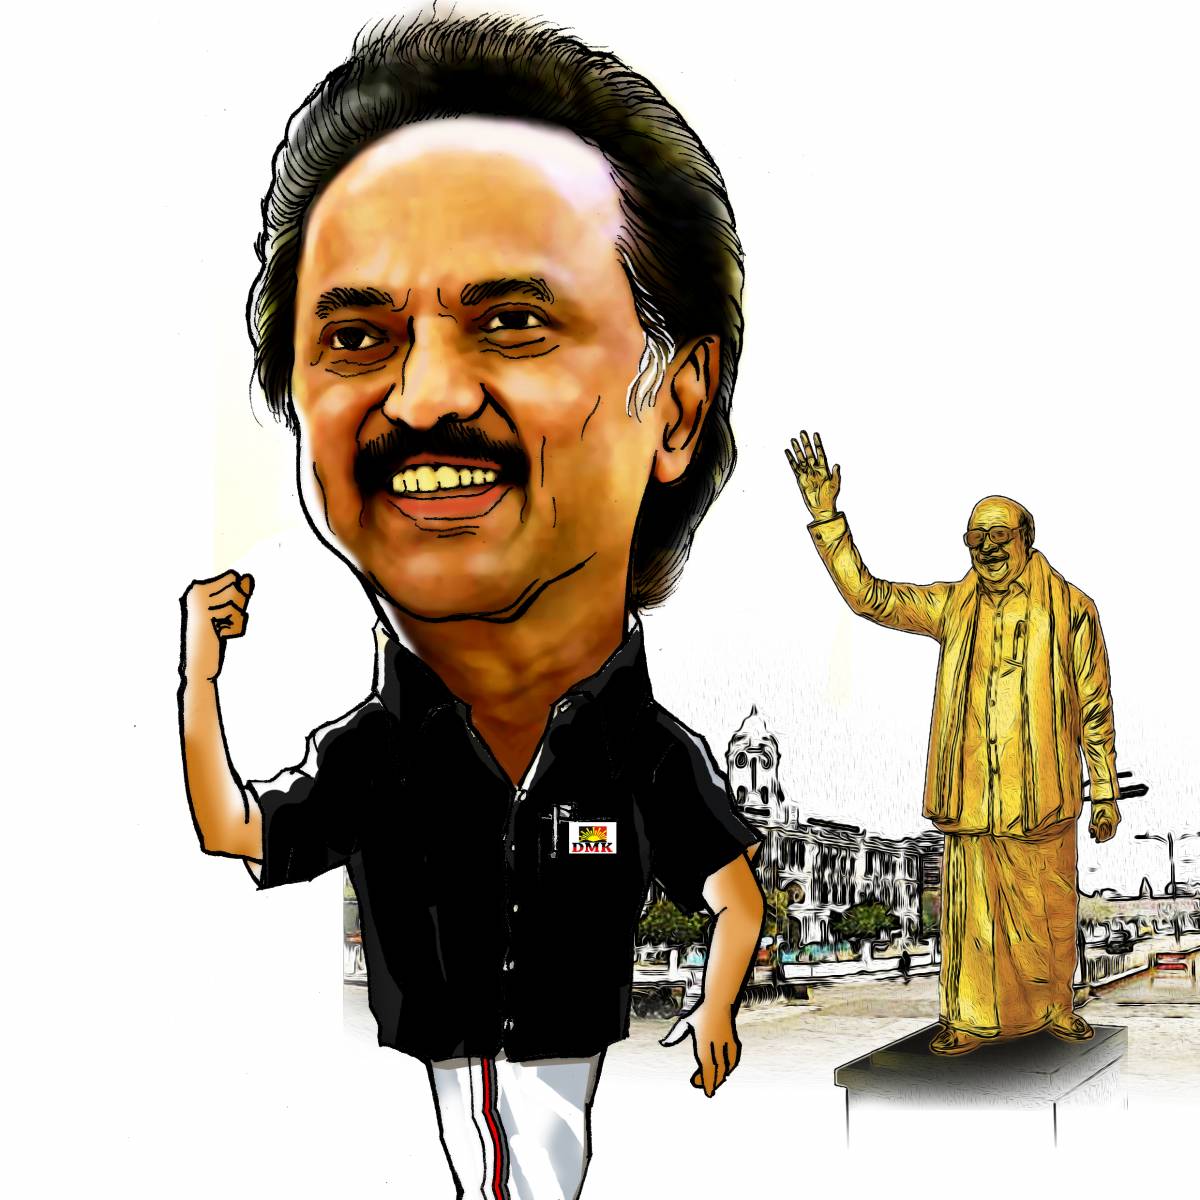 Stalin era begins in Tamil Nadu - India Daily Digital